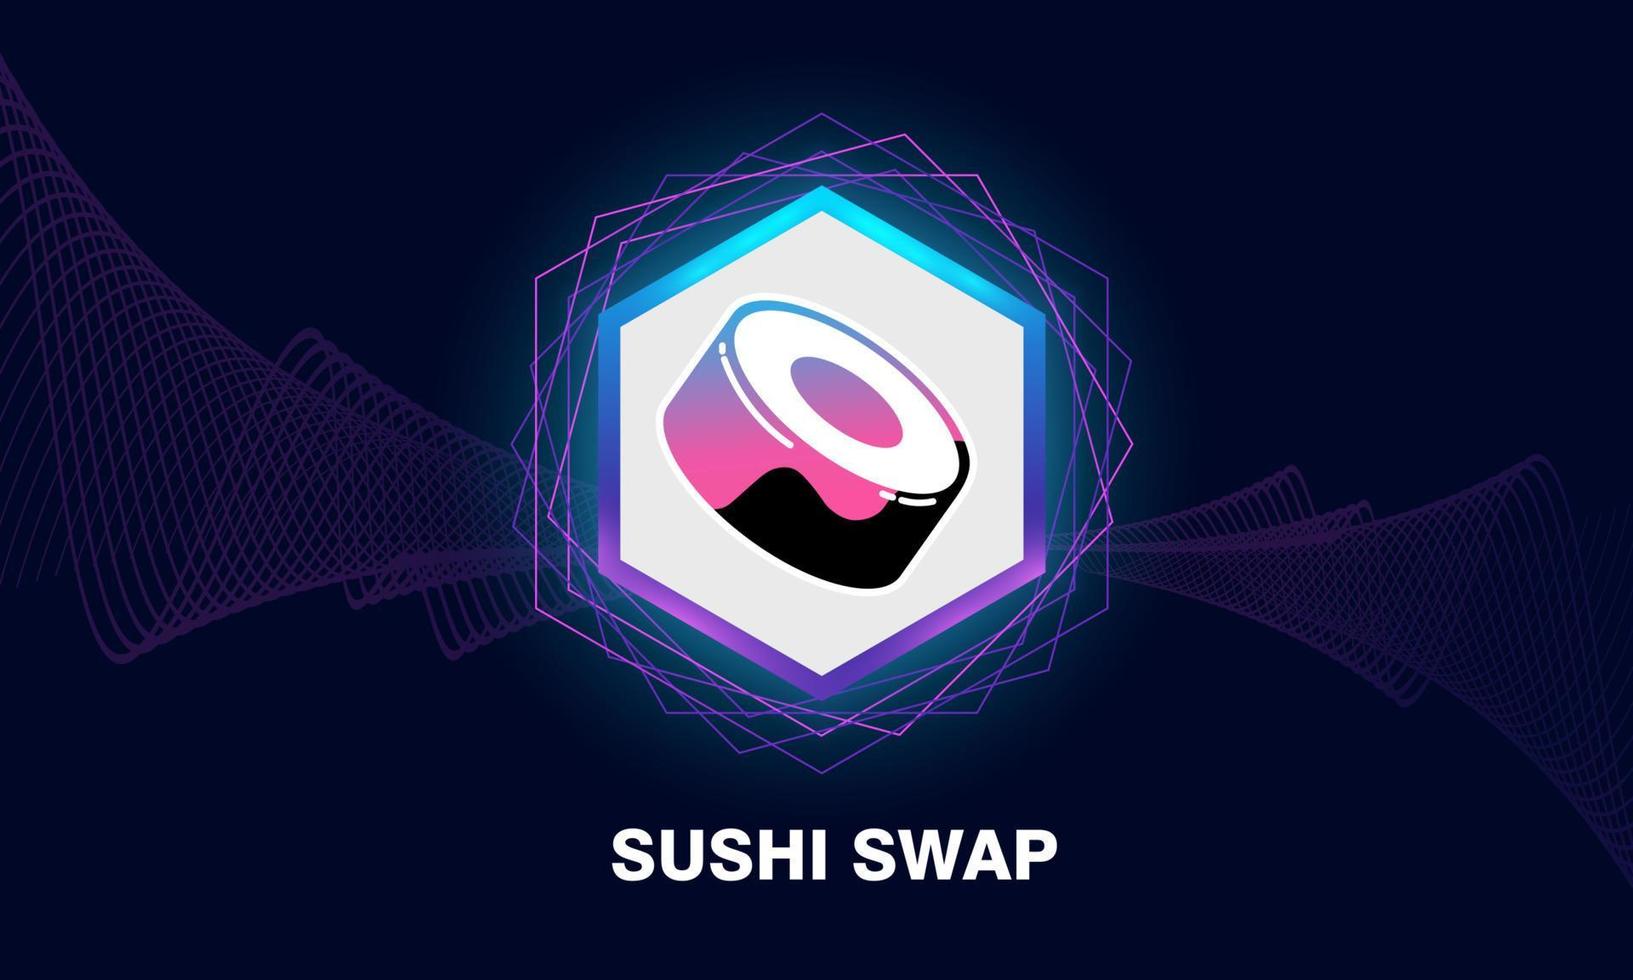 sushi sushiswap logo design.cryptocurrency concept.futuristic neon background. vektor